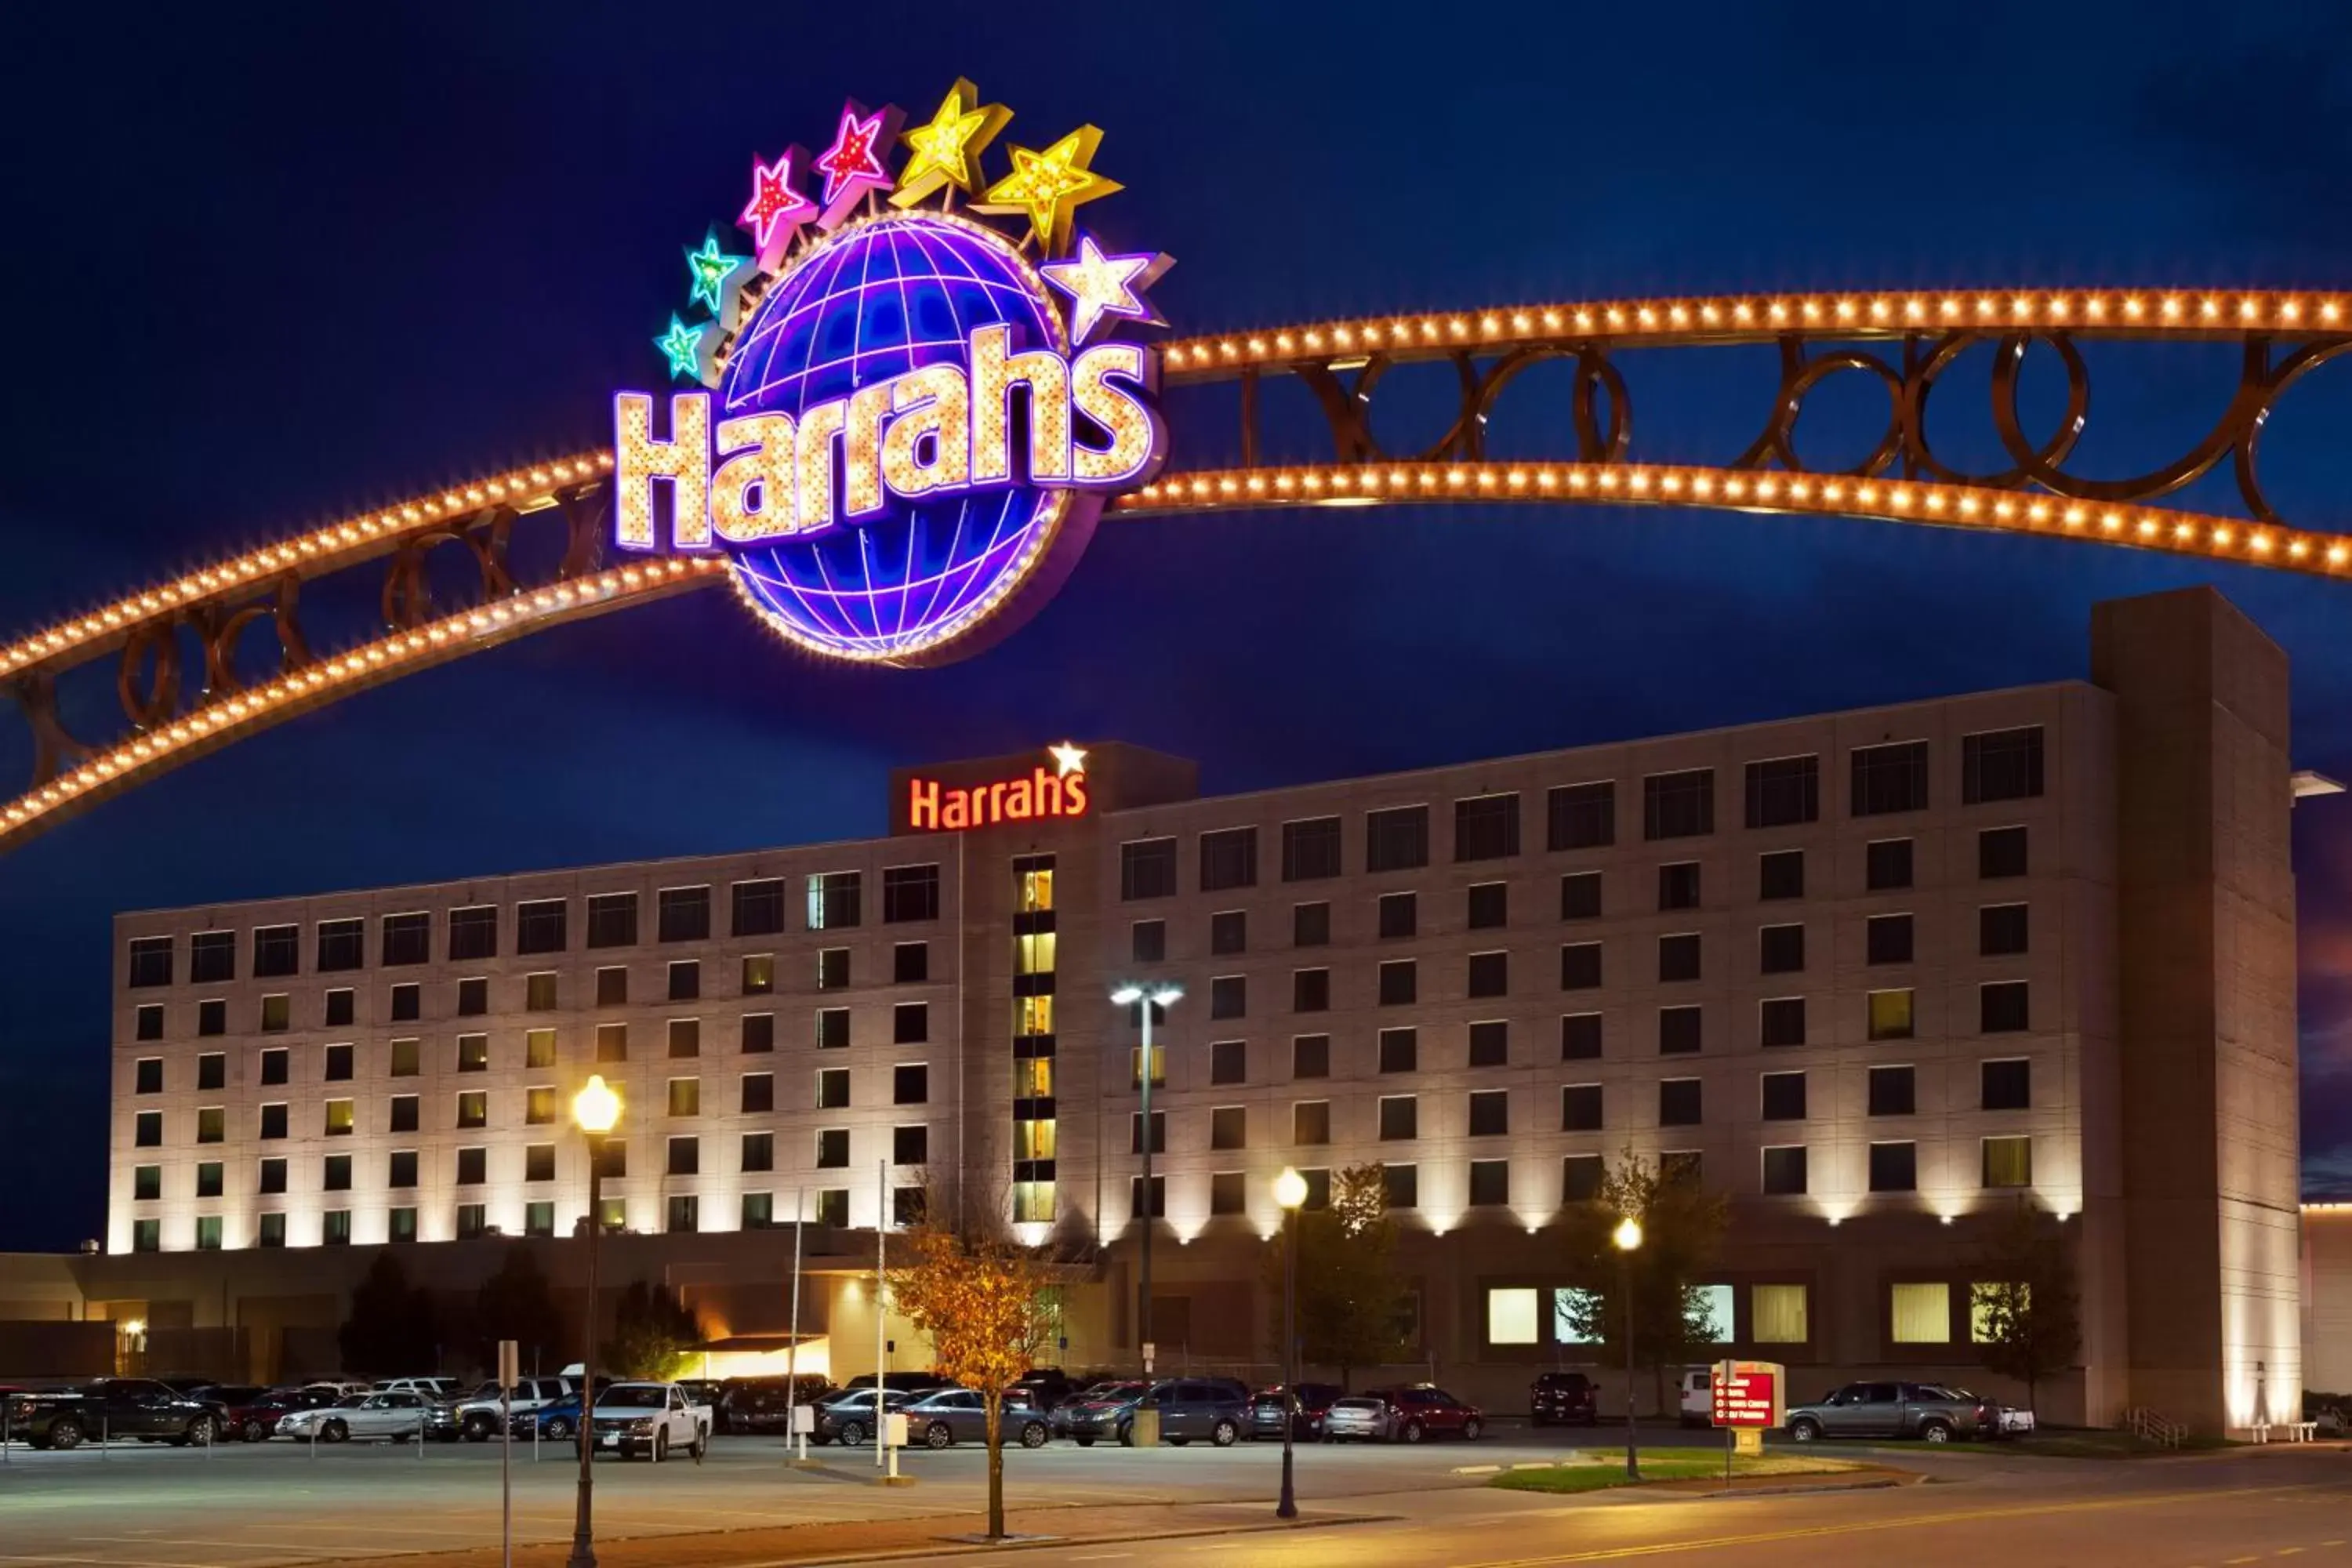 Property logo or sign in Harrah's Joliet Casino Hotel